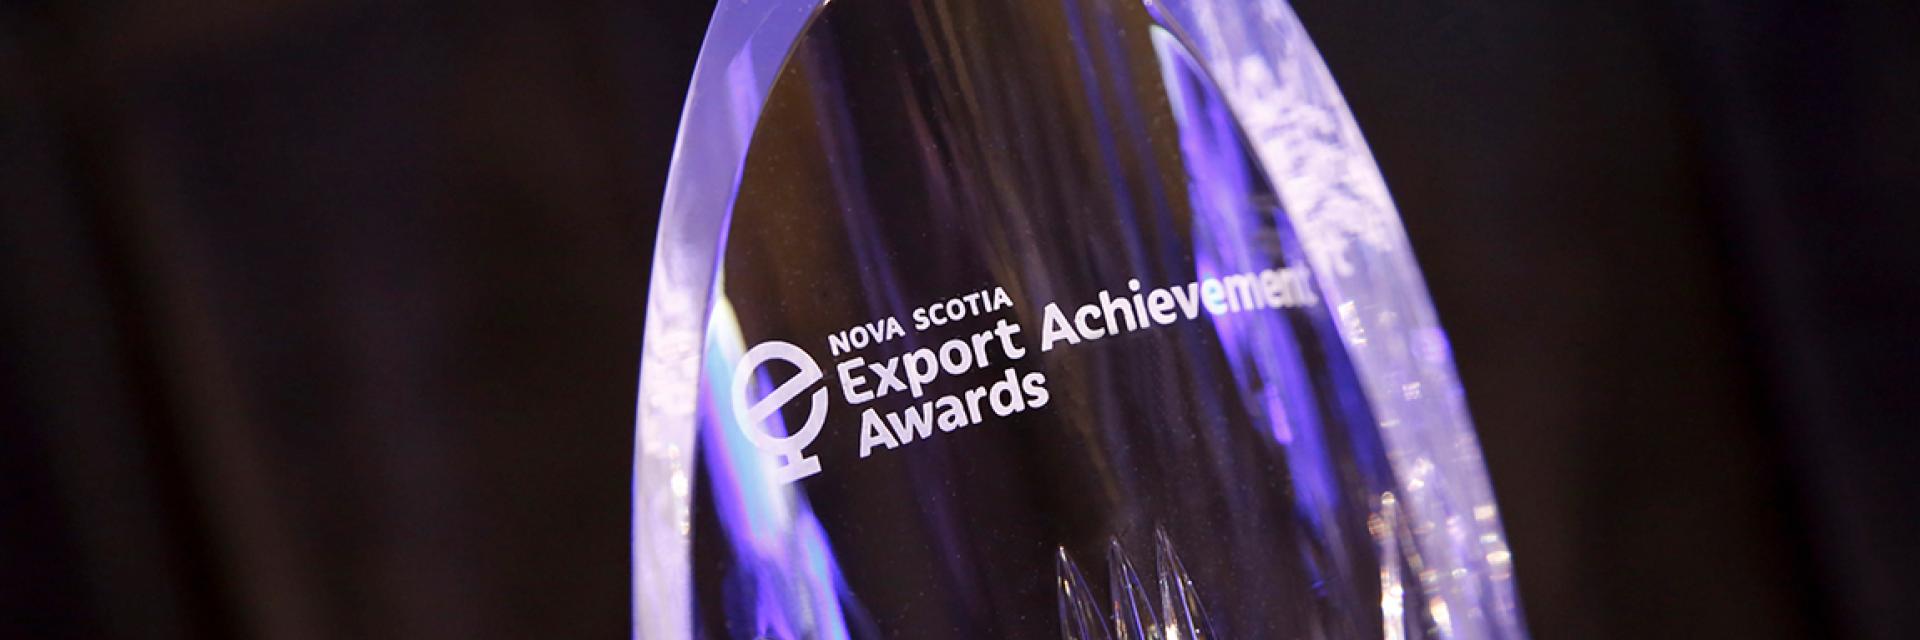 Nova Scotia Export Achievement Awards